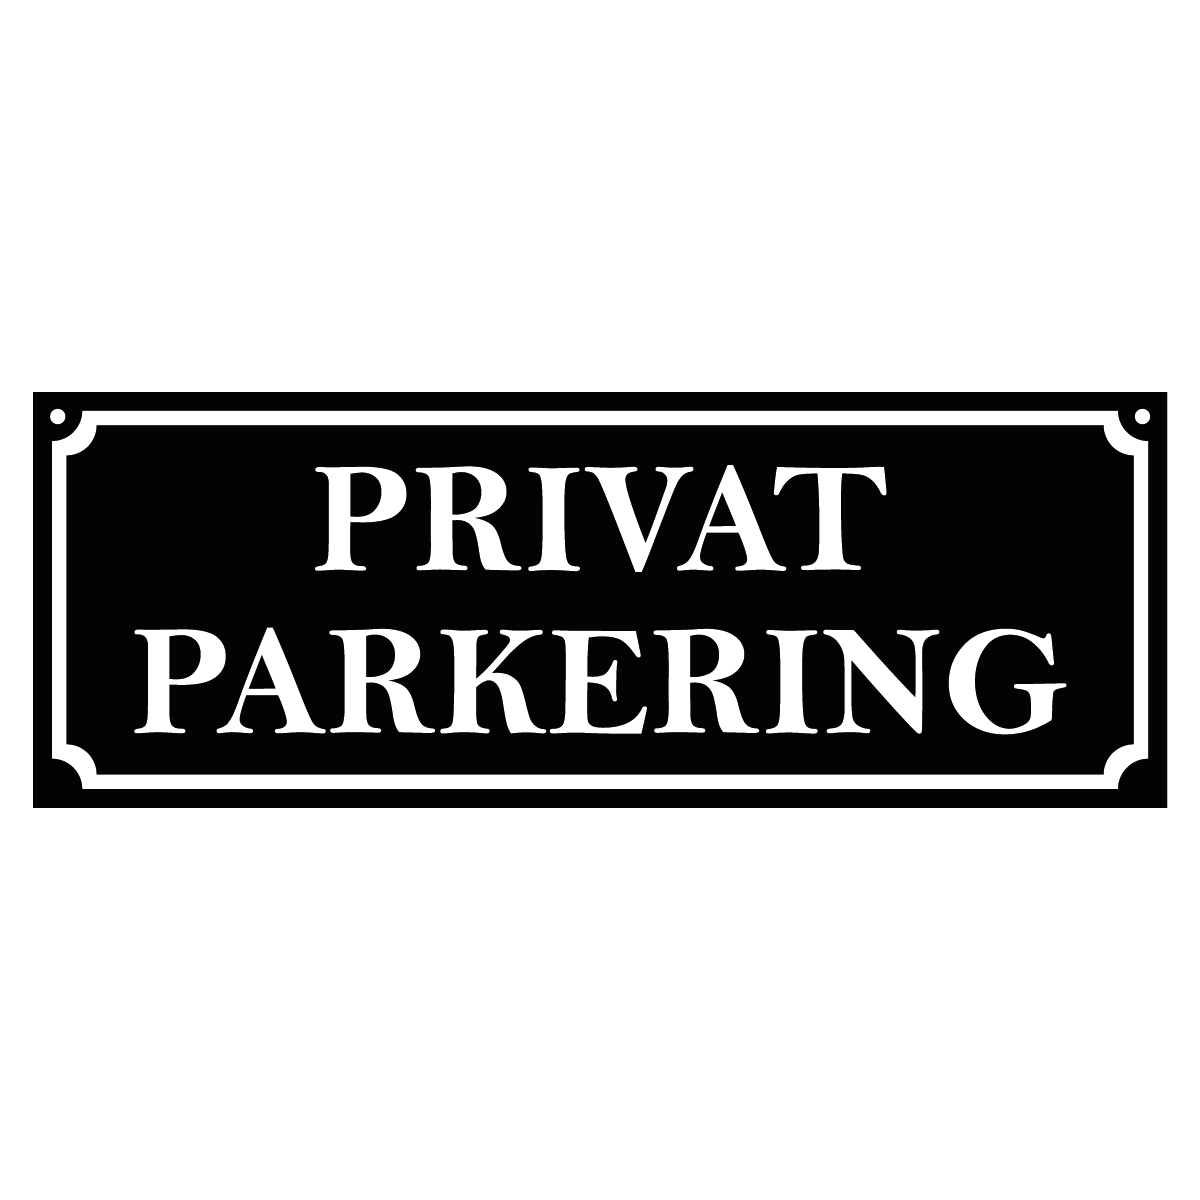  Skylt - Privat Parkering - 300x110mm - Svart/Vit - Hålad Ovankant